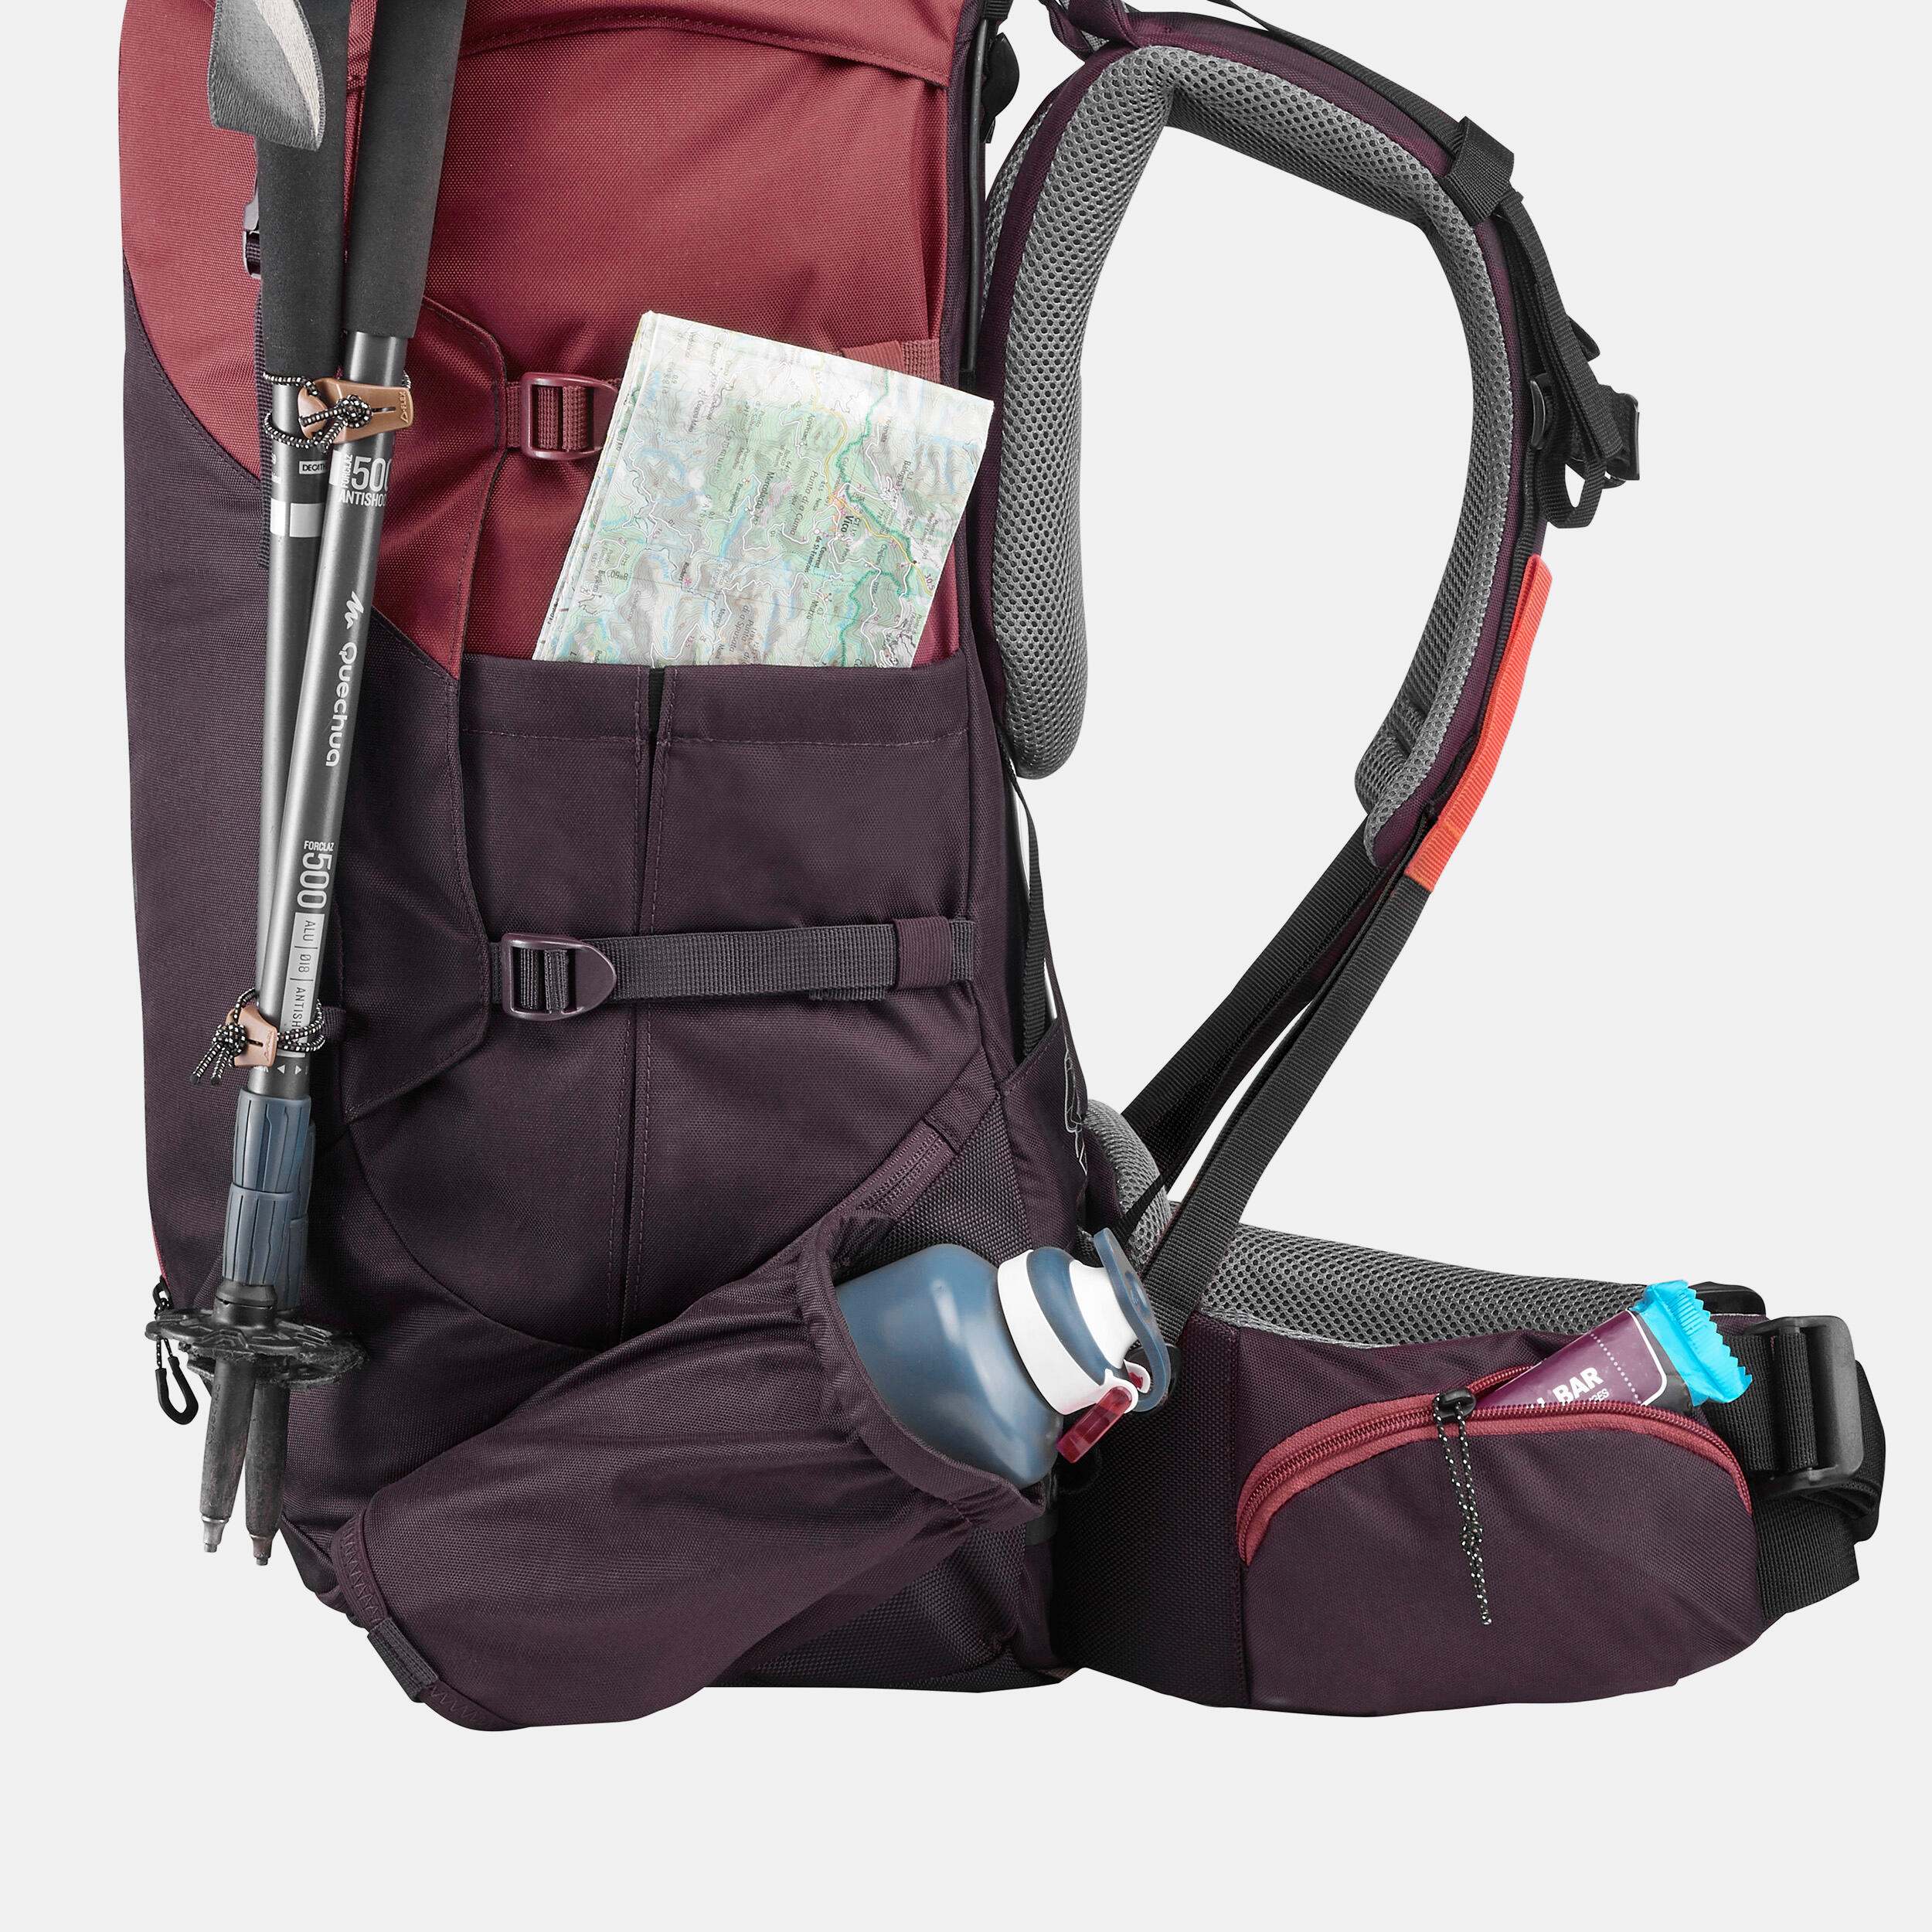 Women's 50 L Hiking Backpack - MT 100 Easyfit - Bordeaux, Deep chocolate  truffle - Forclaz - Decathlon